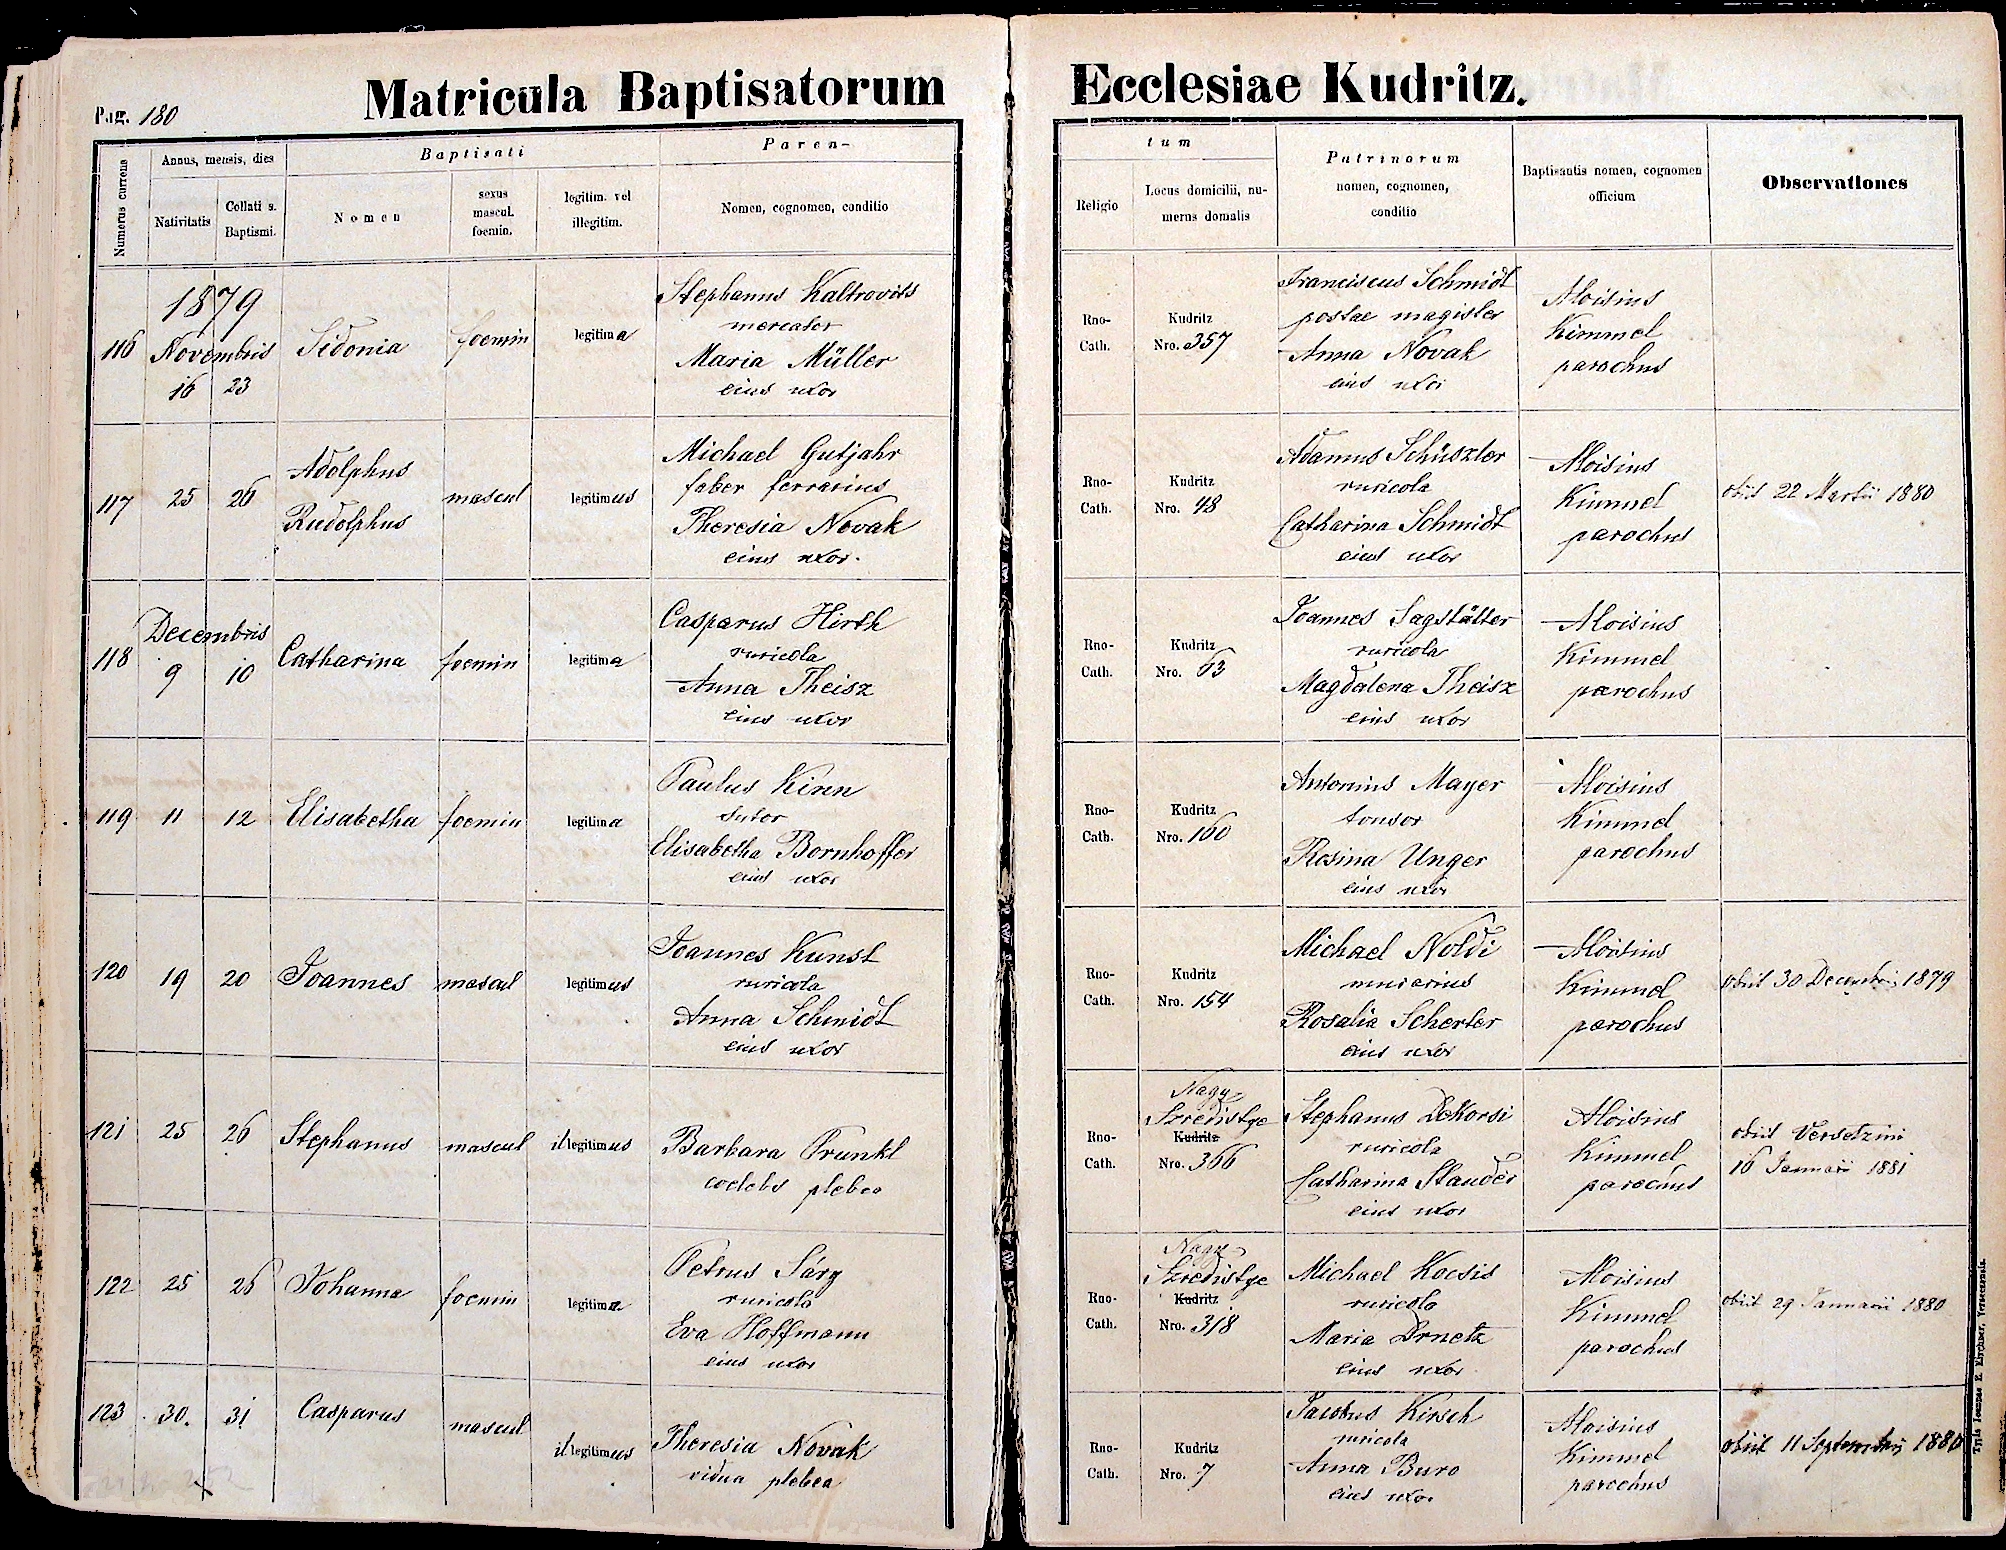 images/church_records/BIRTHS/1884-1899B/1896/180